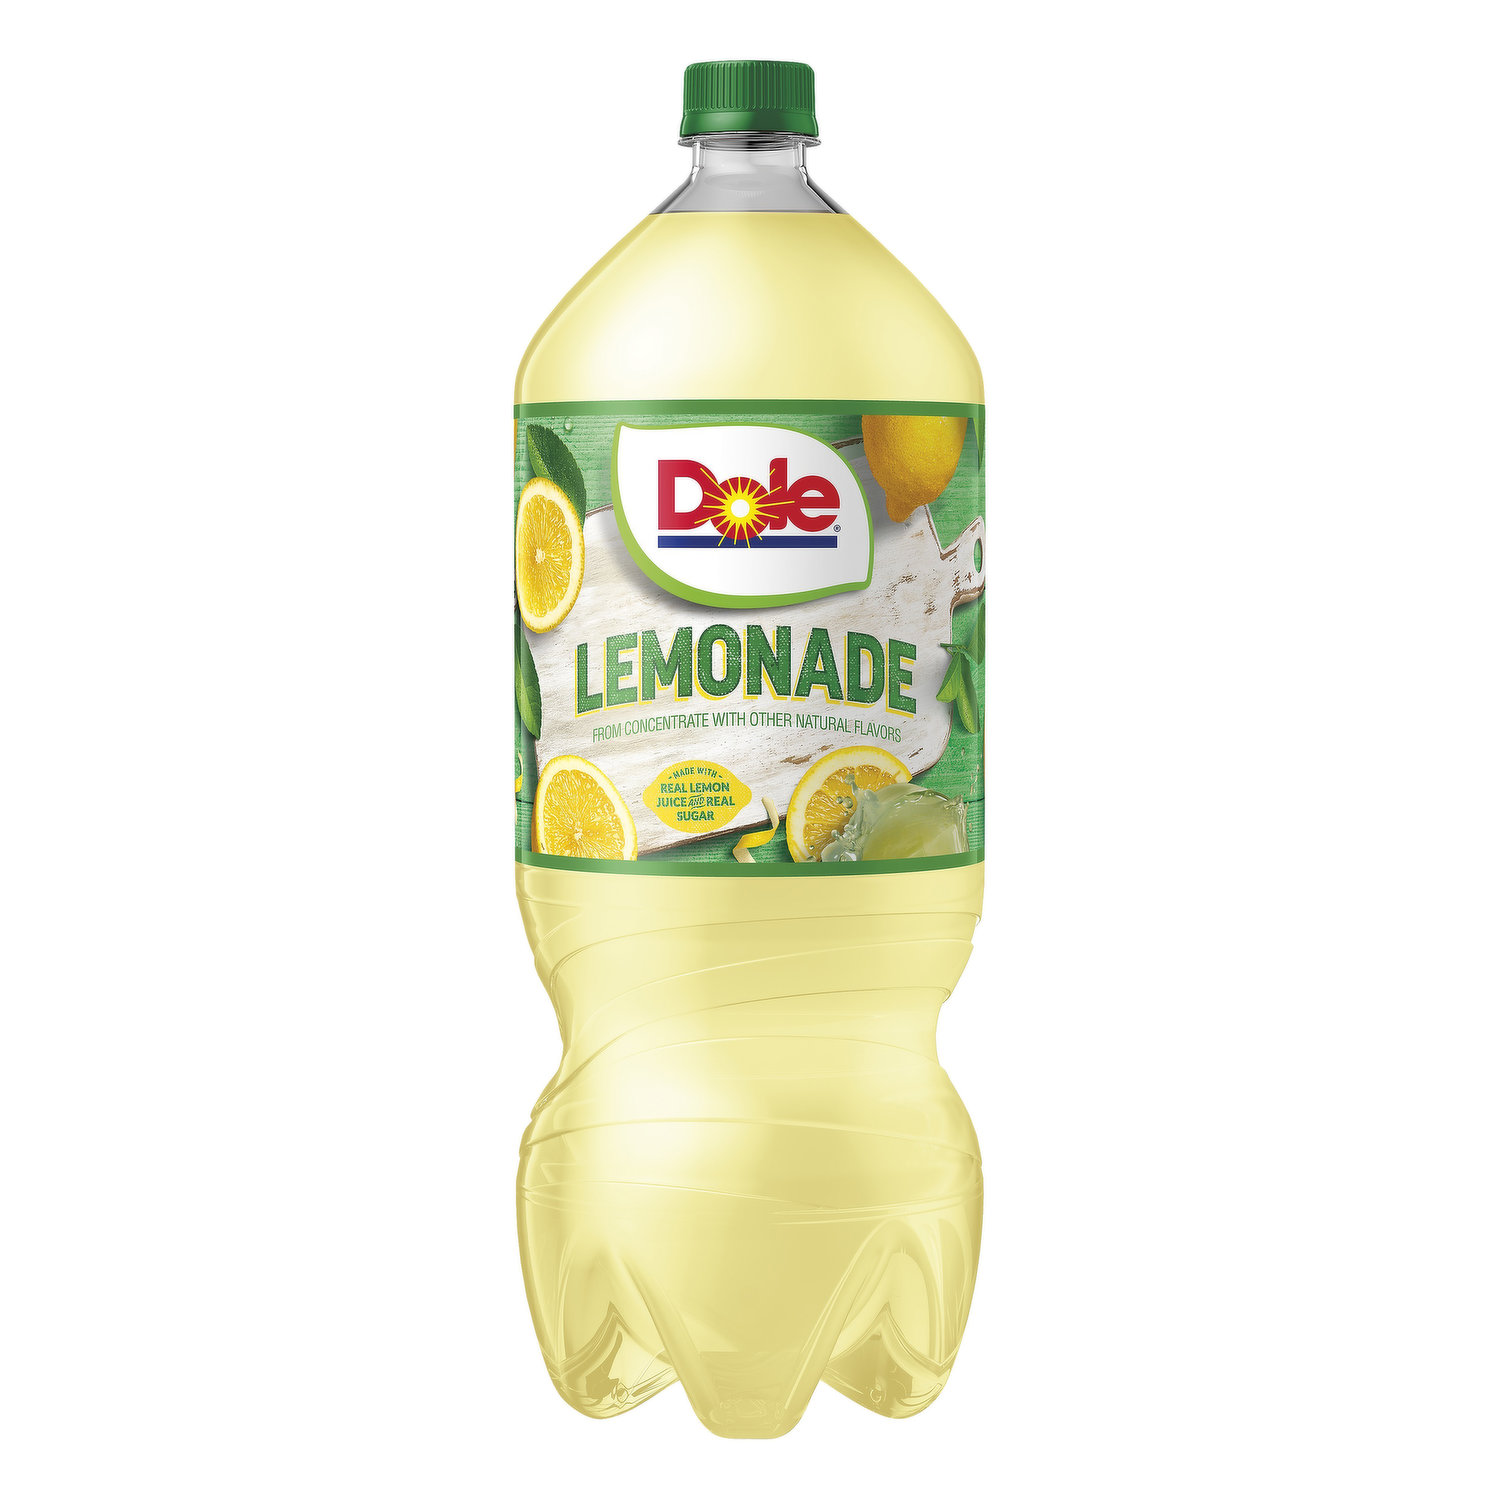 19-dole-lemonade-nutrition-facts